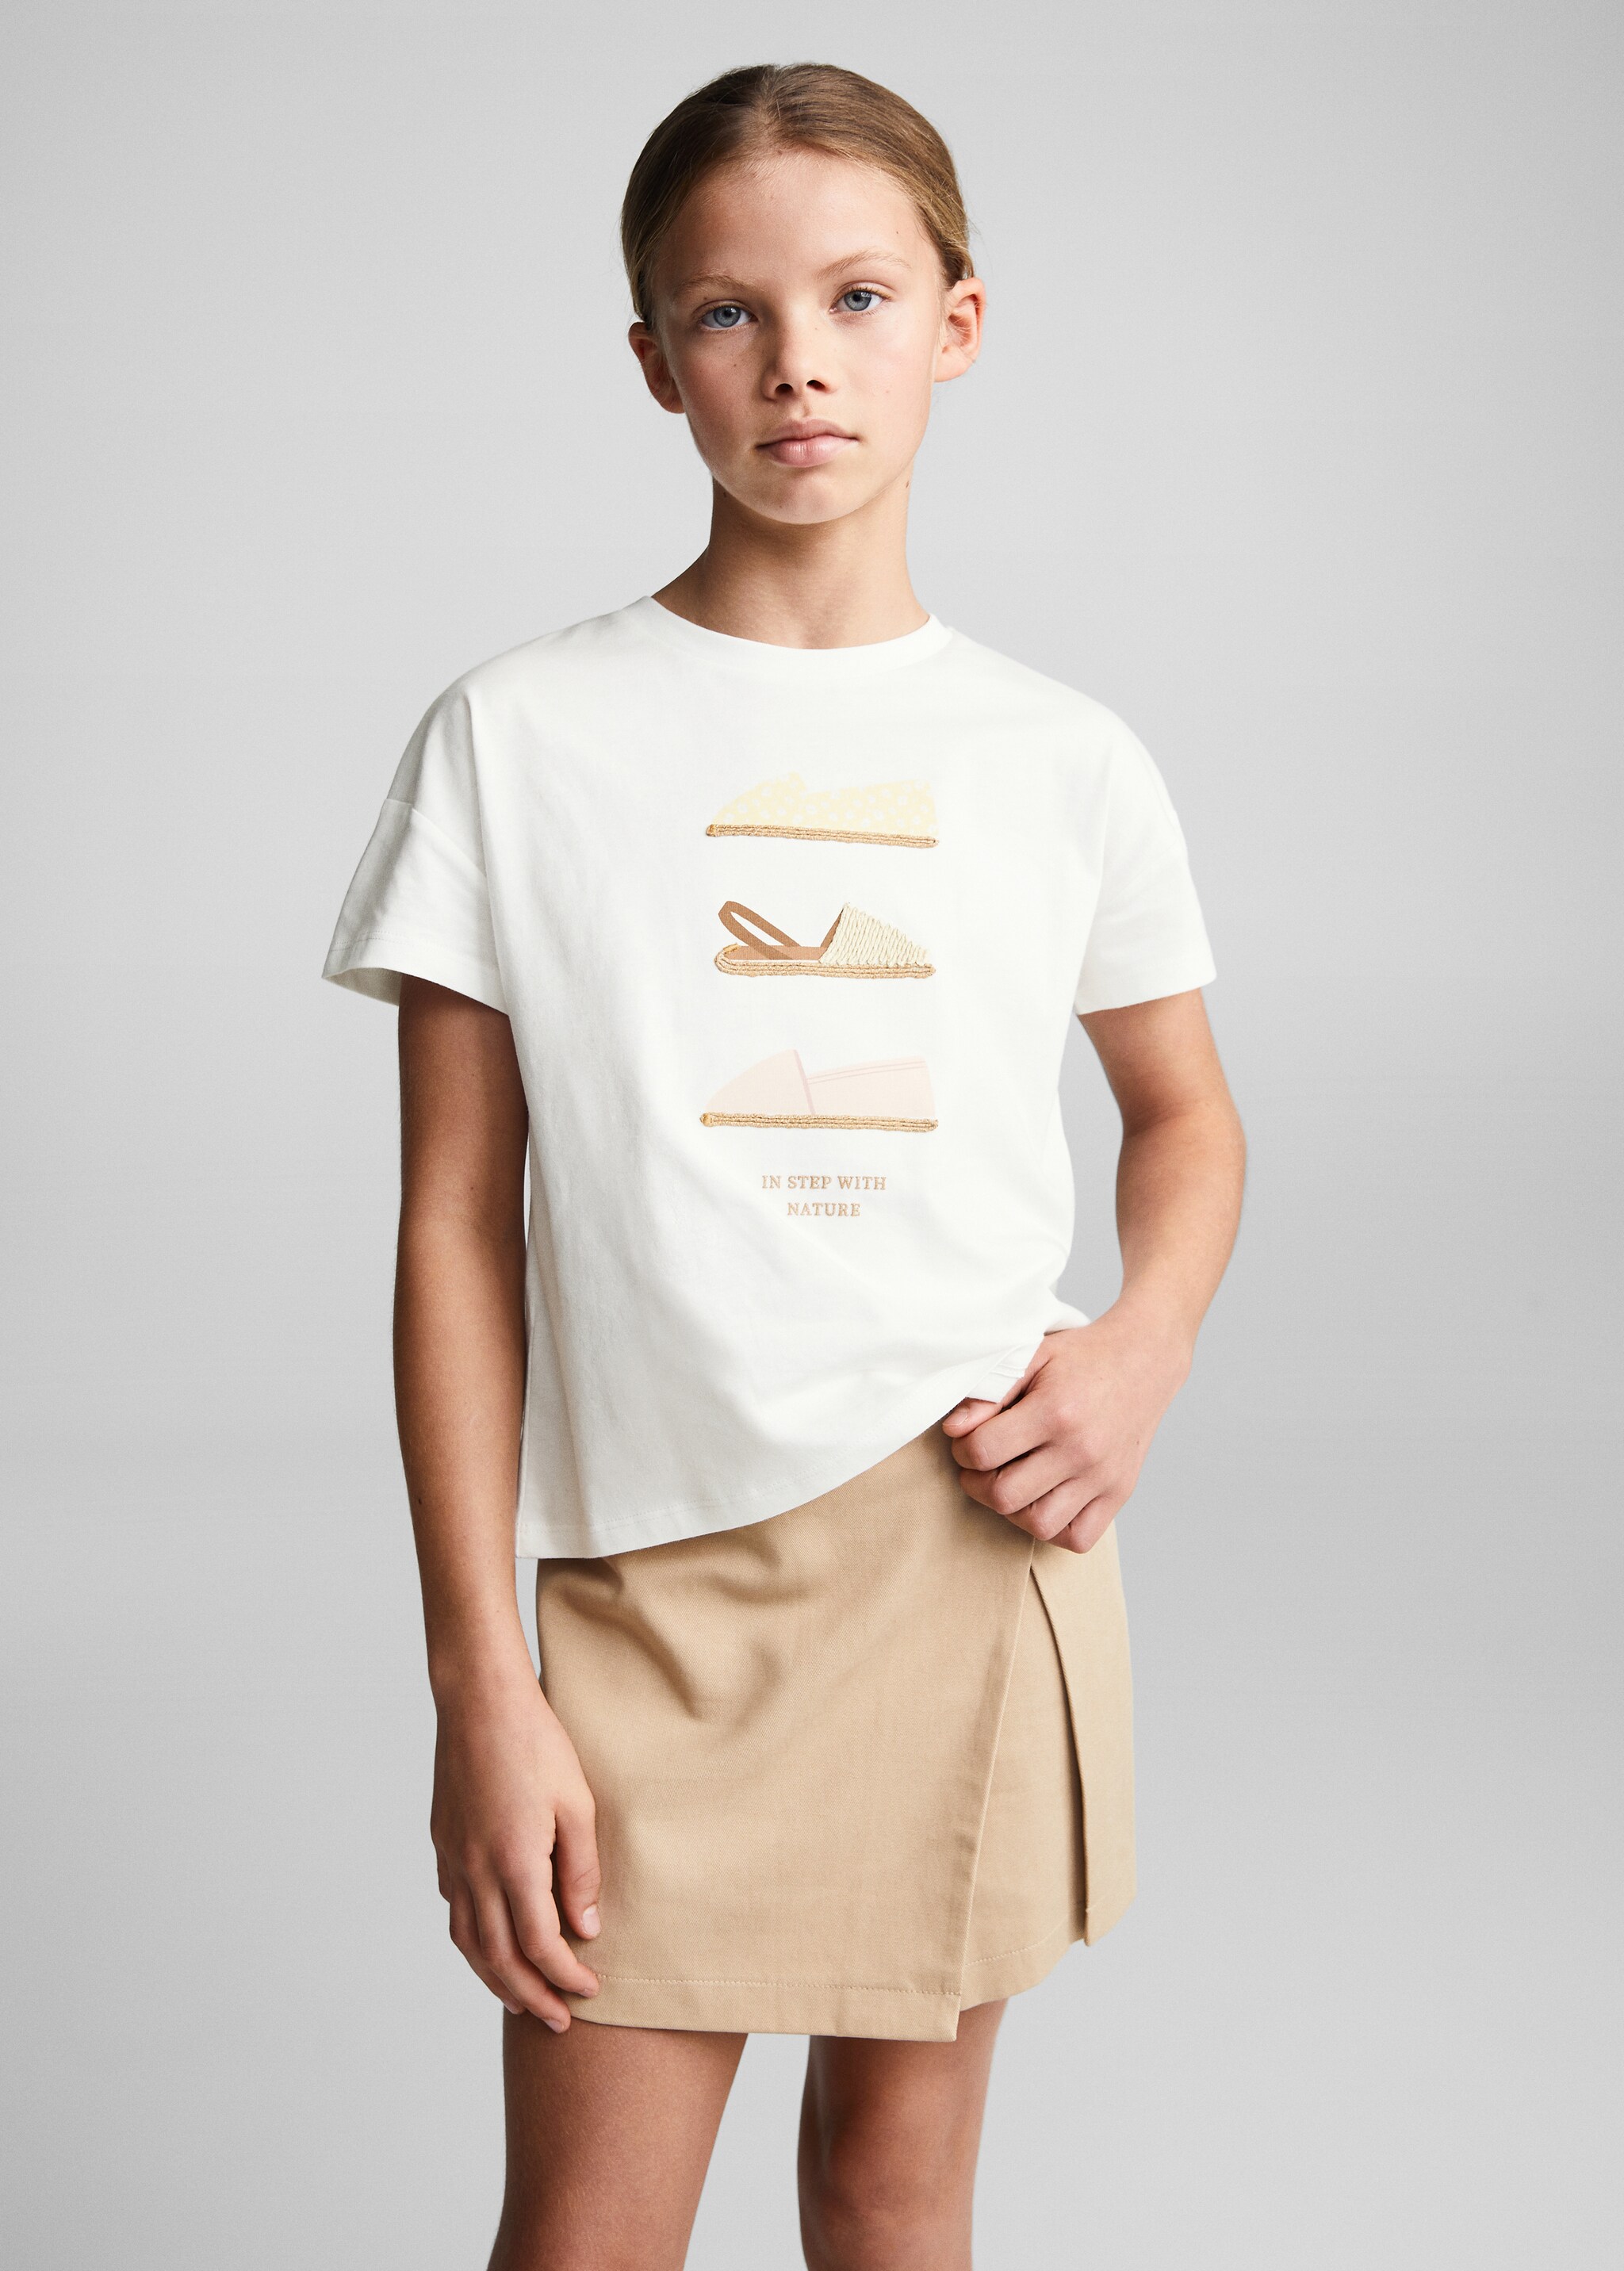 Short-sleeved printed t-shirt - Medium plane